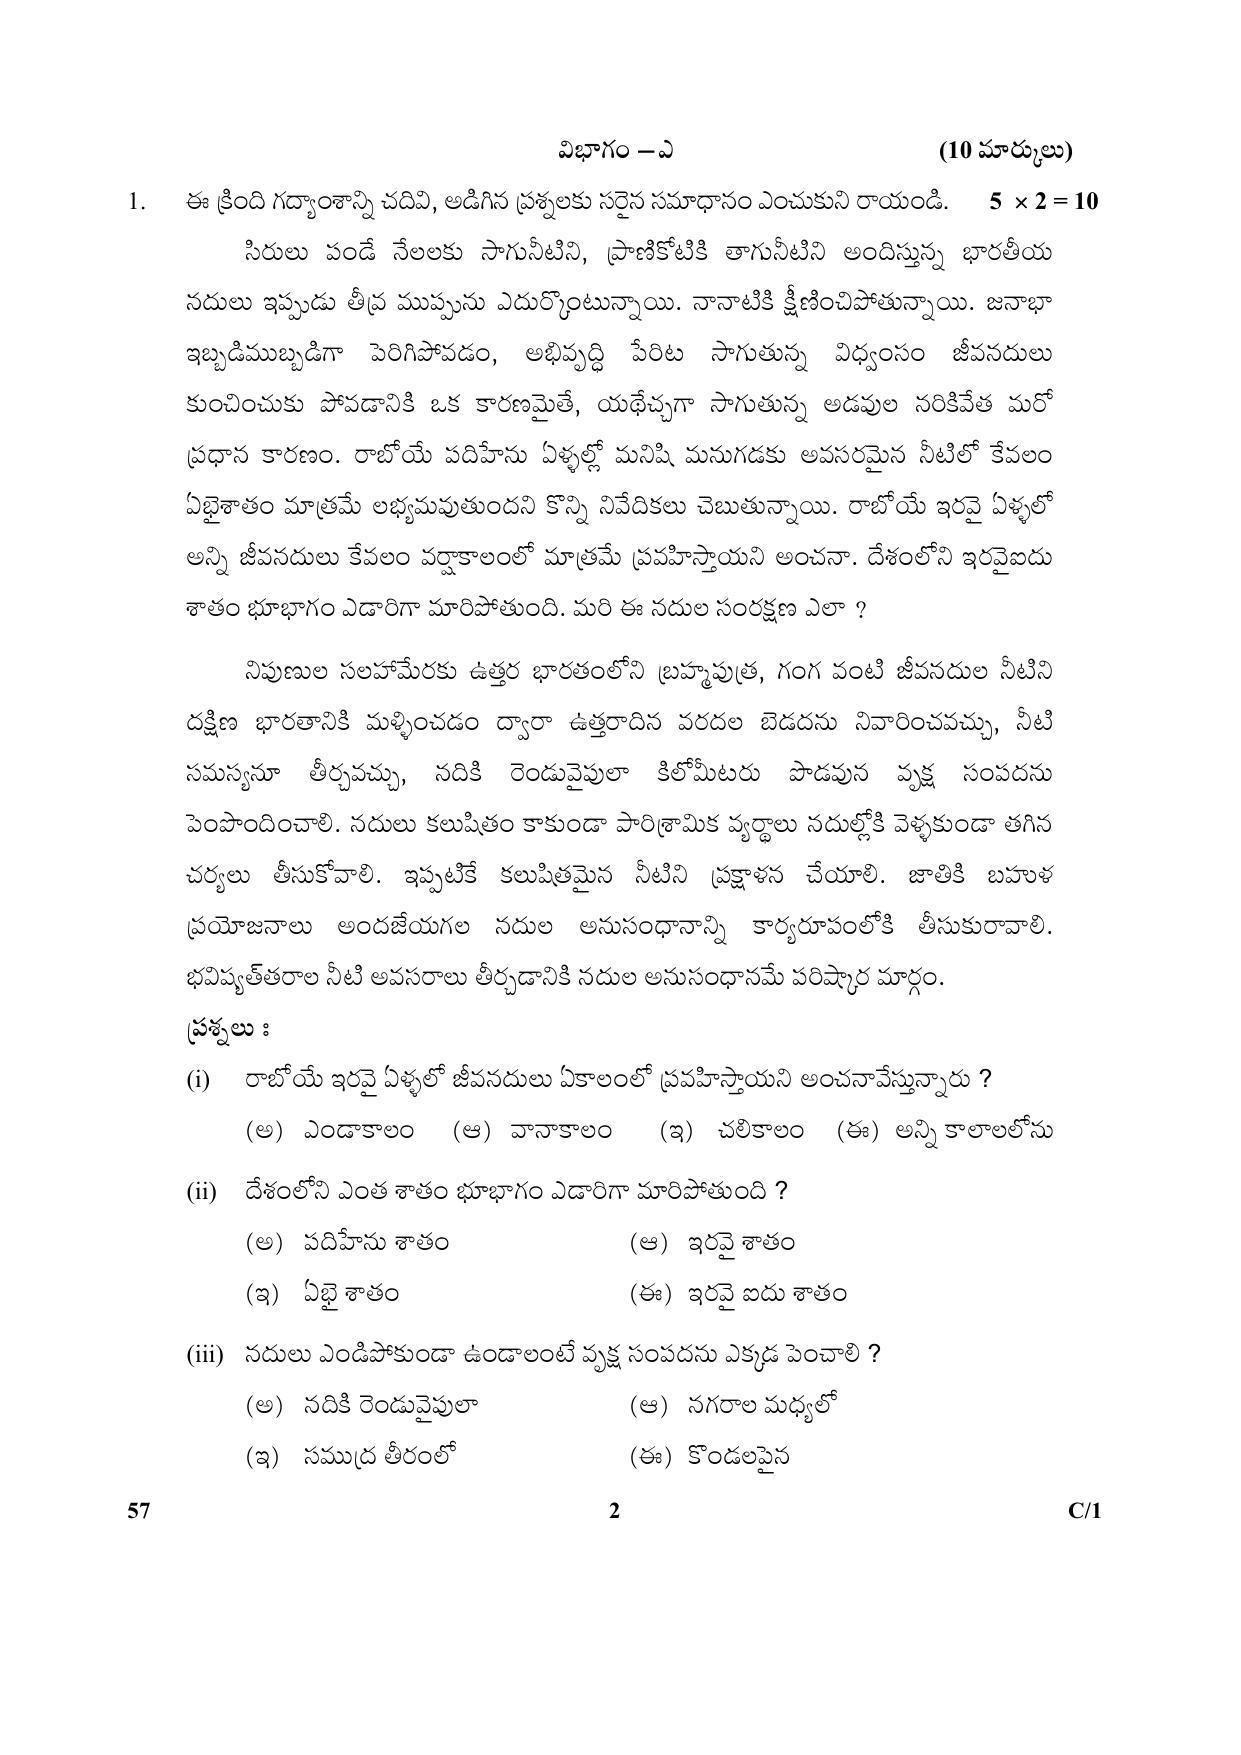 CBSE Class 10 57 (Telugu) 2018 Compartment Question Paper - Page 2